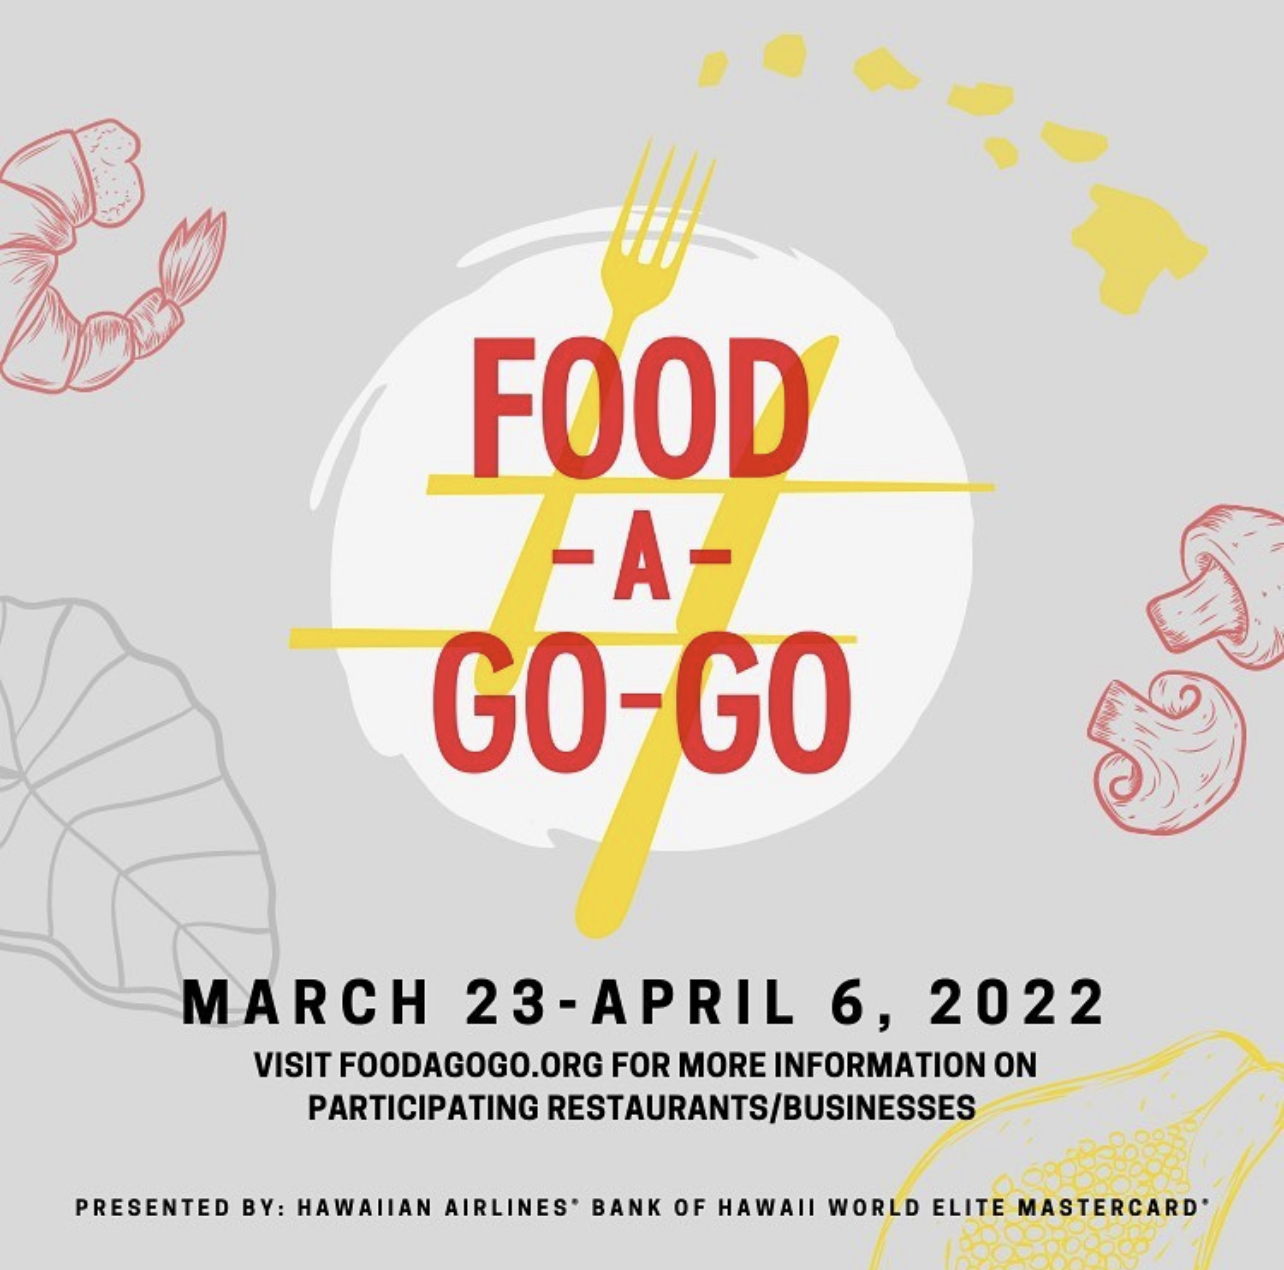 FOOD-A-GO-GO WEEK